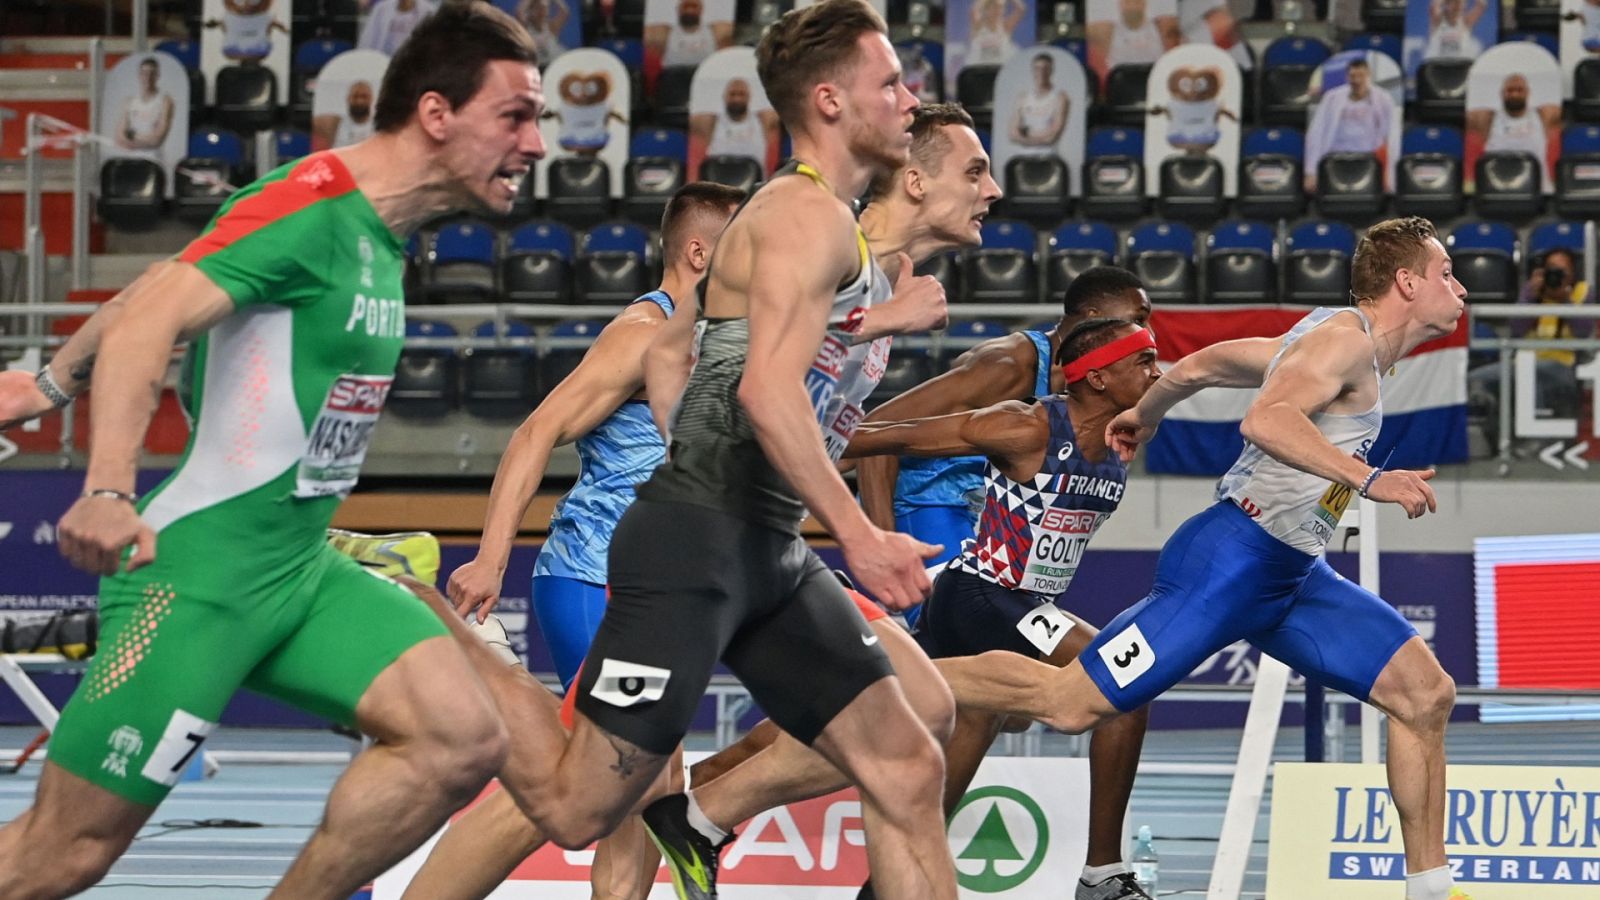 Atletismo - Campeonato de Europa Pista Cubierta. Semifinales 60m Masculino